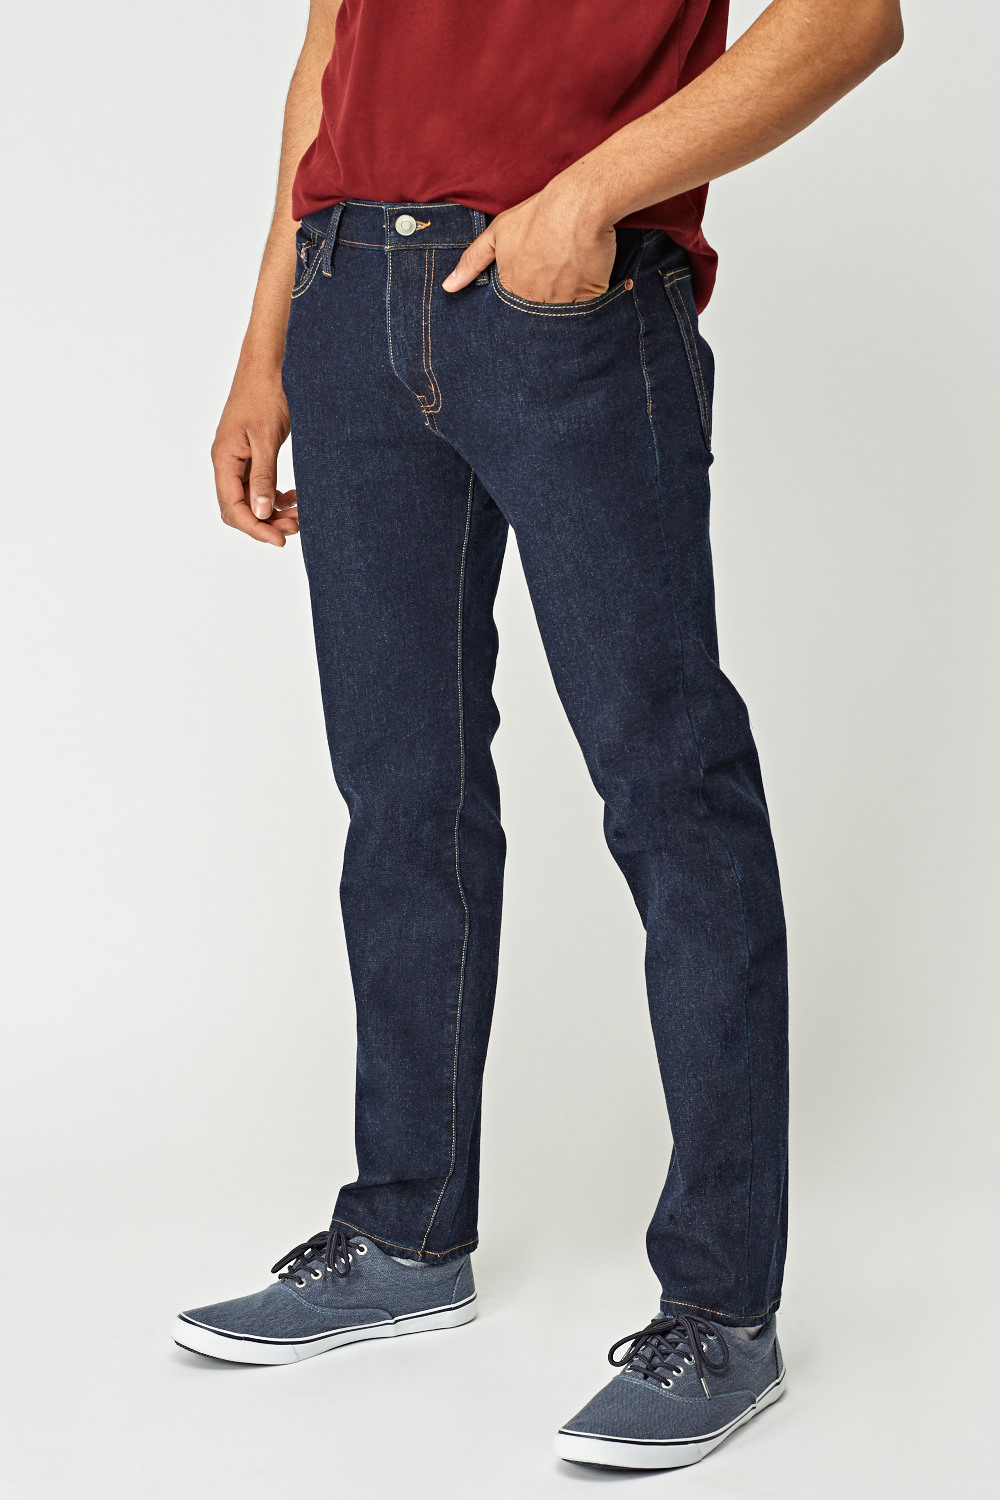 Denim Straight Leg Jeans - Just $6